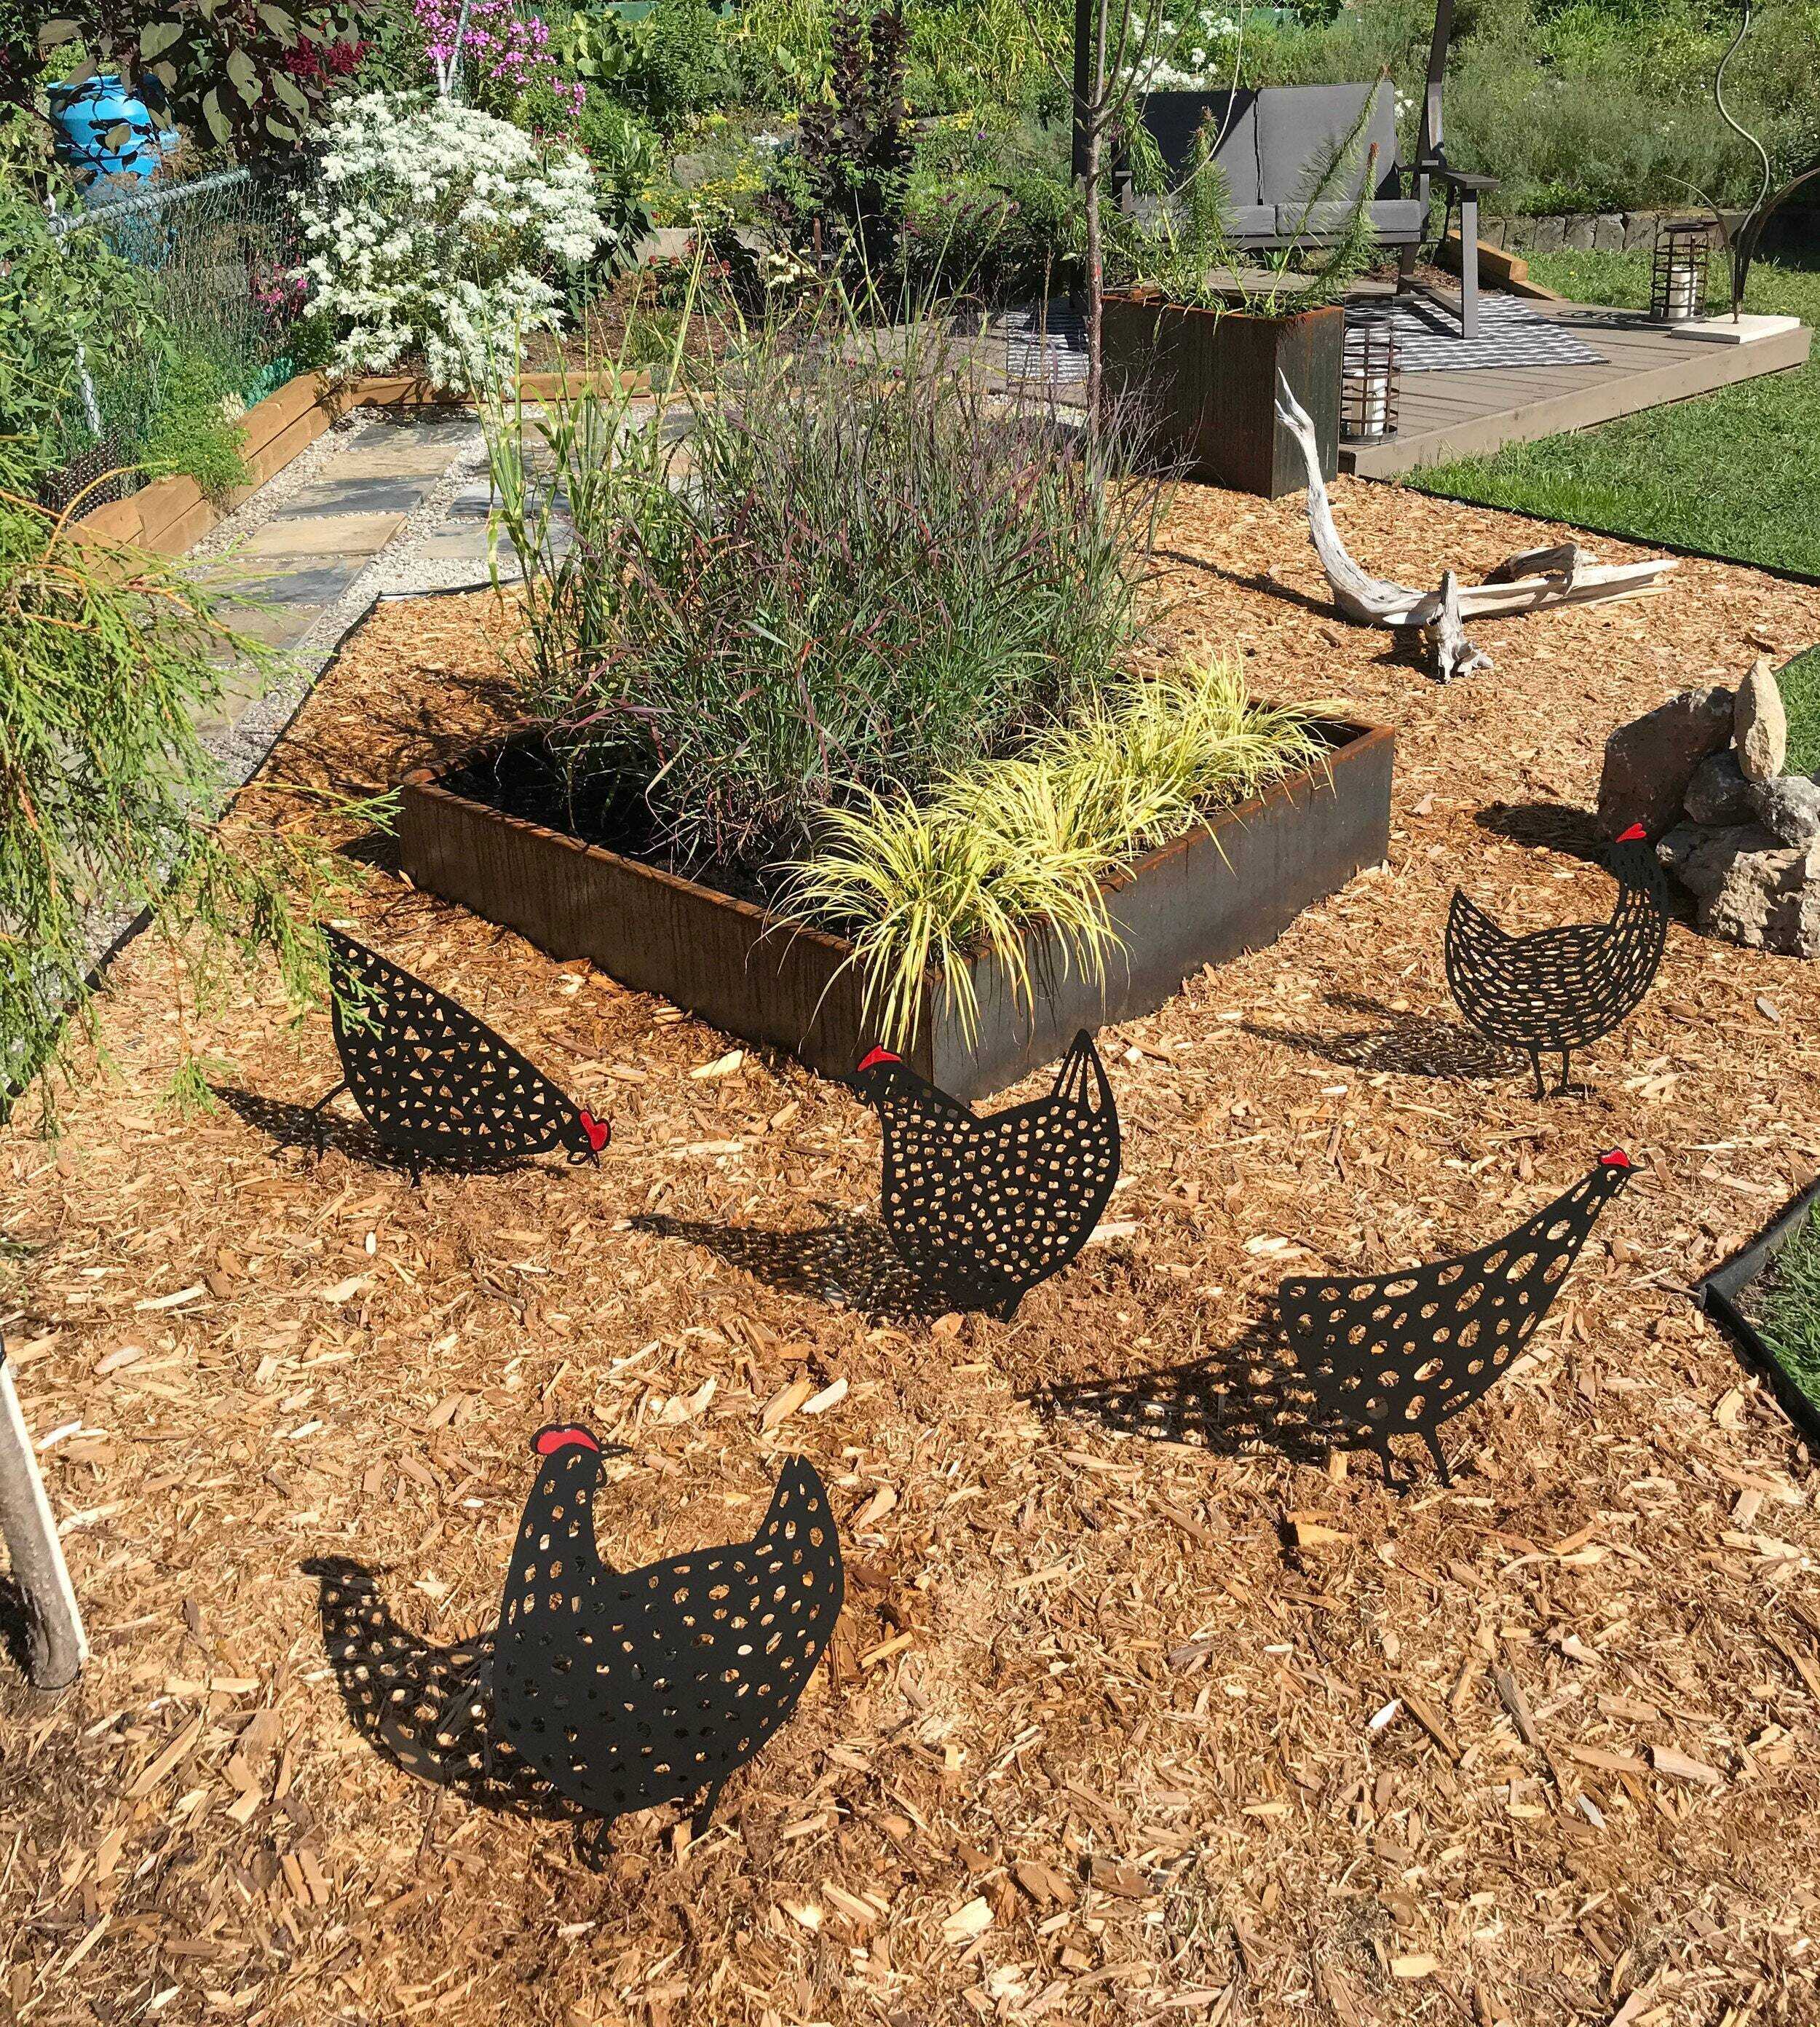 Metal Chicken Yard Art - Garden Art